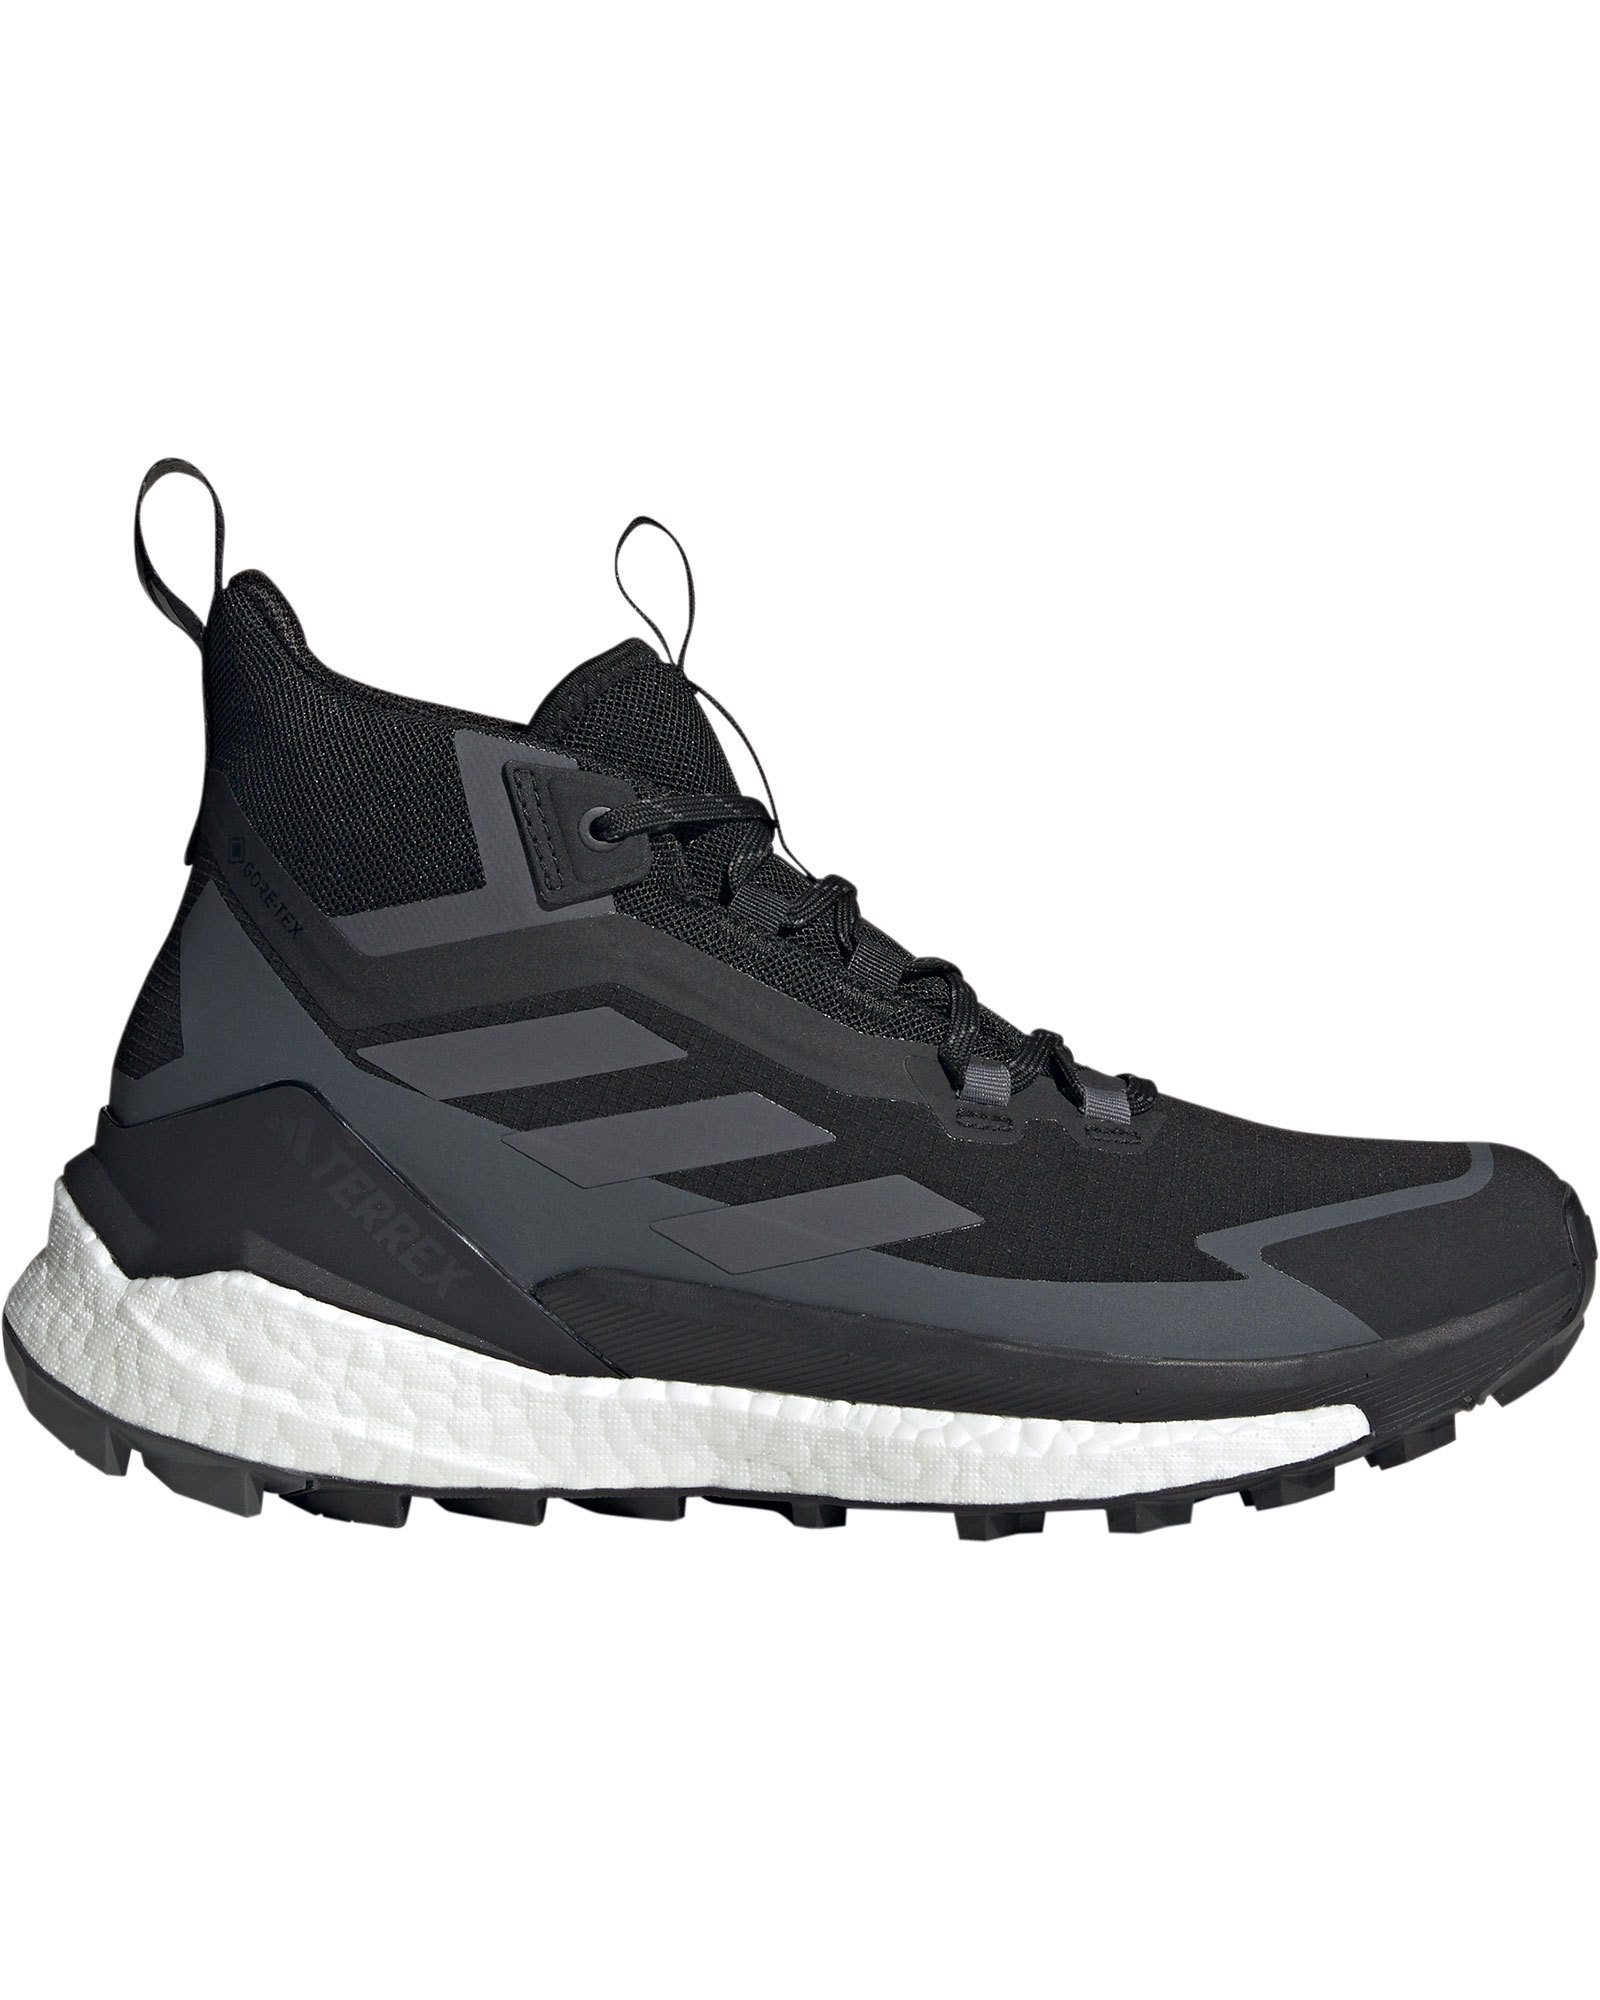 adidas TERREX Free Hiker 2 GORE TEX Men’s Boots - Core Black/Grey Six/Grey Three UK 9.5